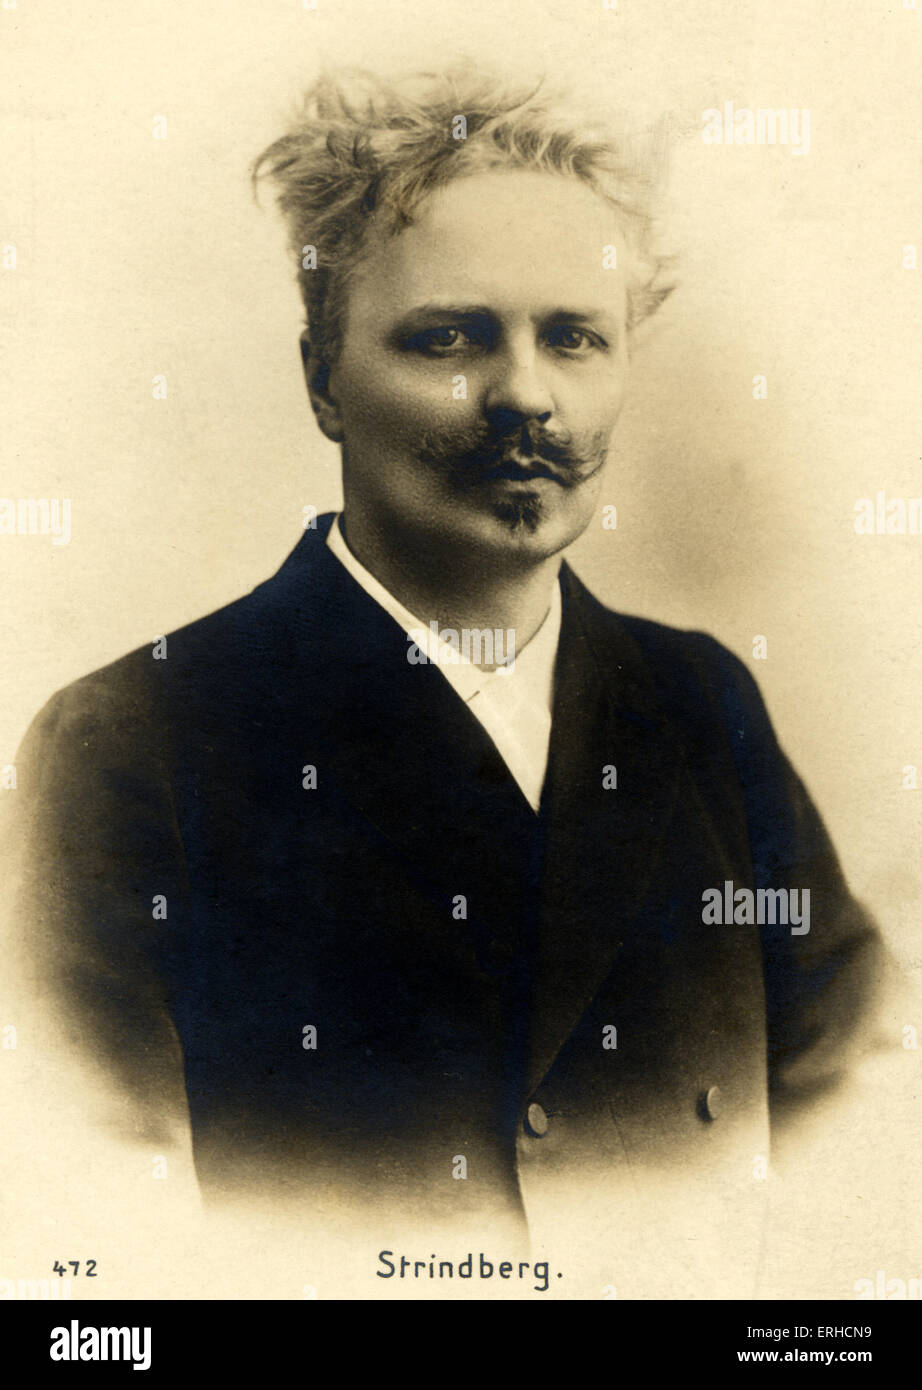 J A Strindberg - portrait - Swedish playwright and author - 1849-1912 Stock Photo